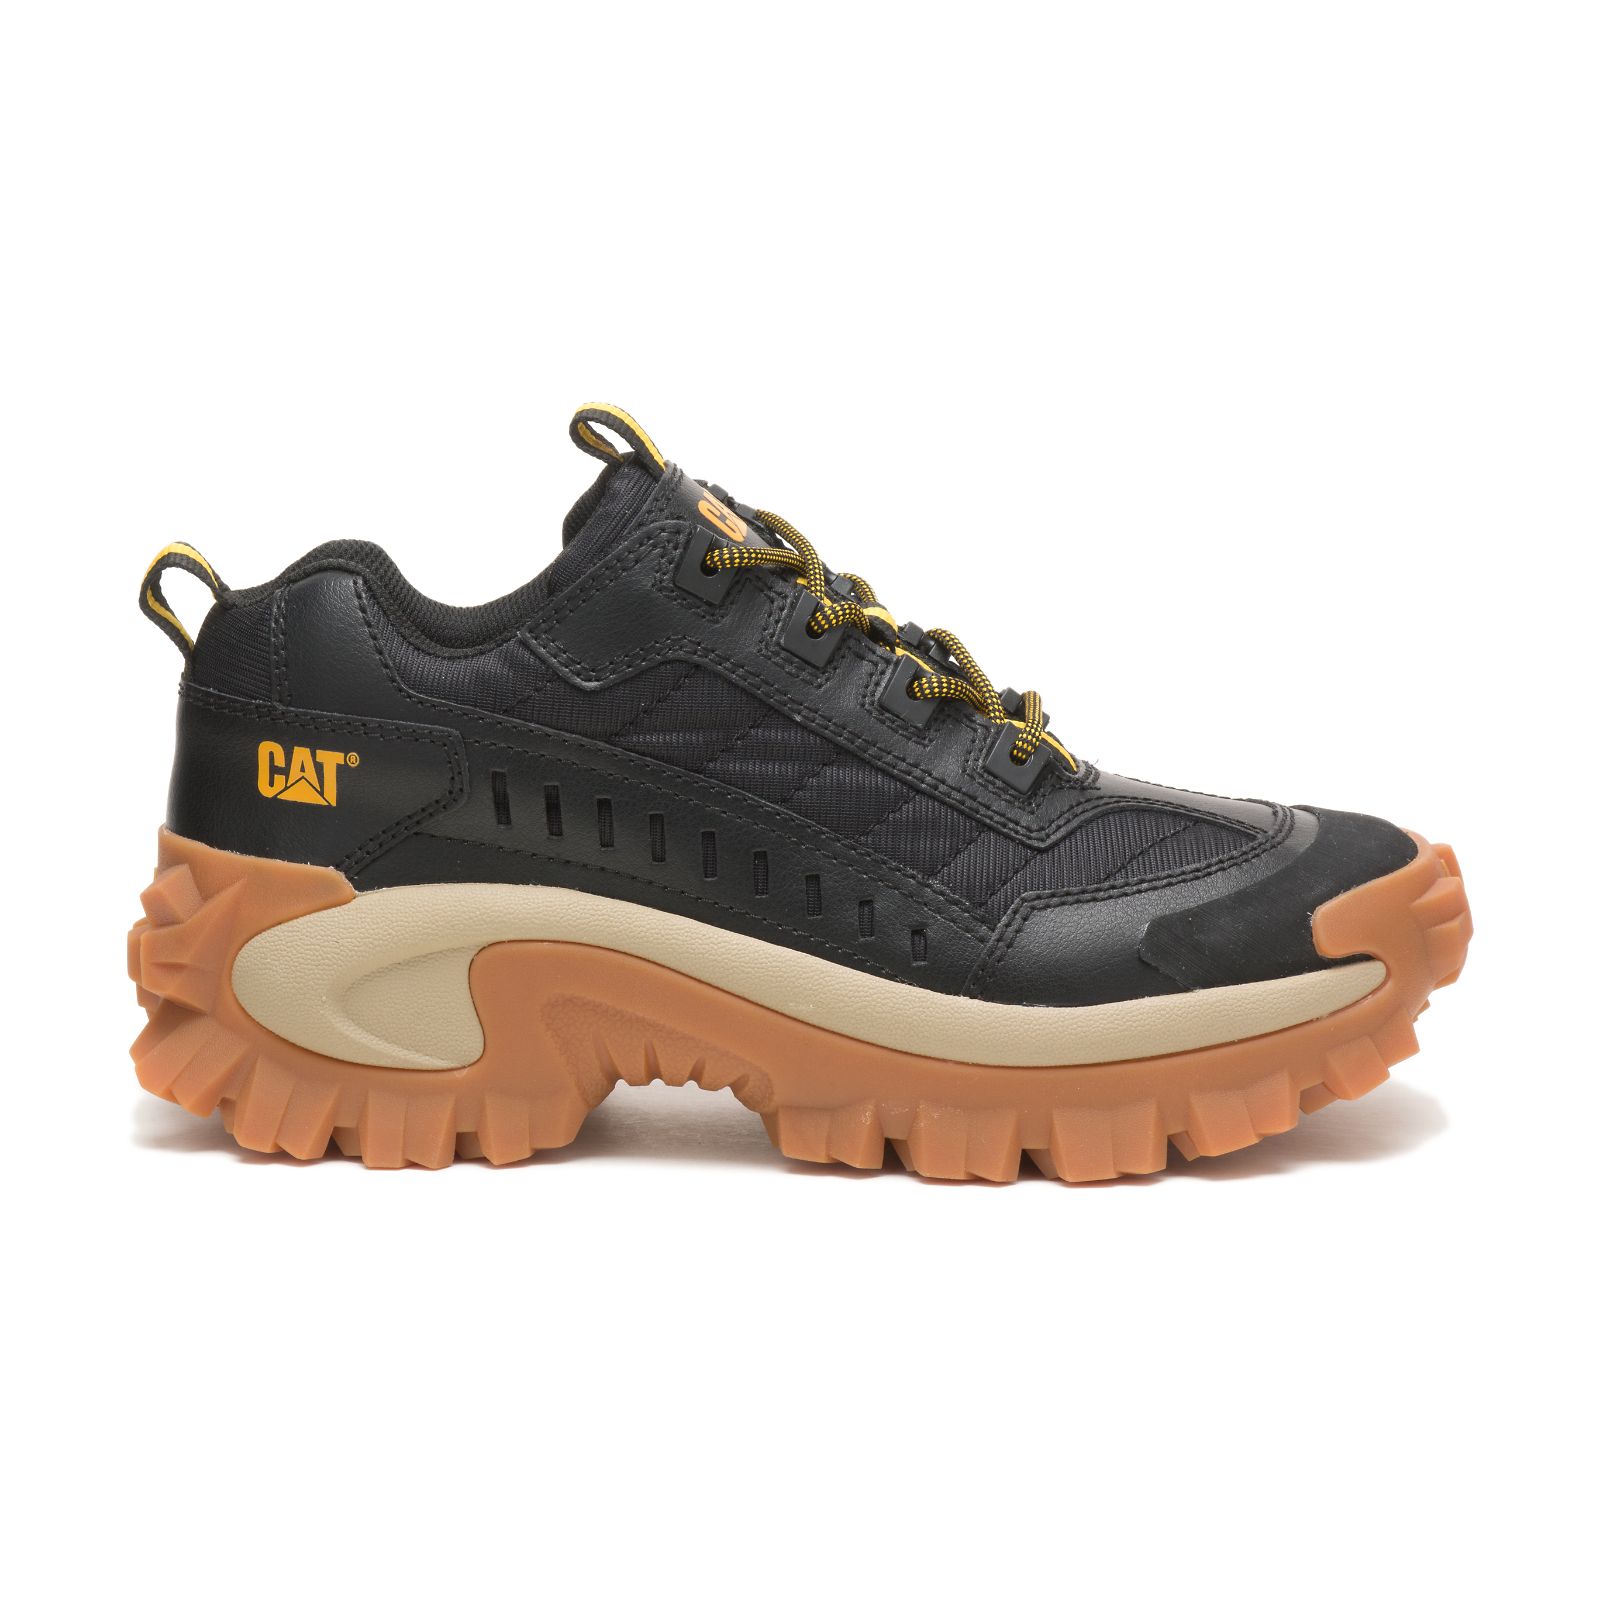 Caterpillar Casual Shoes Dubai - Caterpillar Intruder Mens - Black OIZJYA765